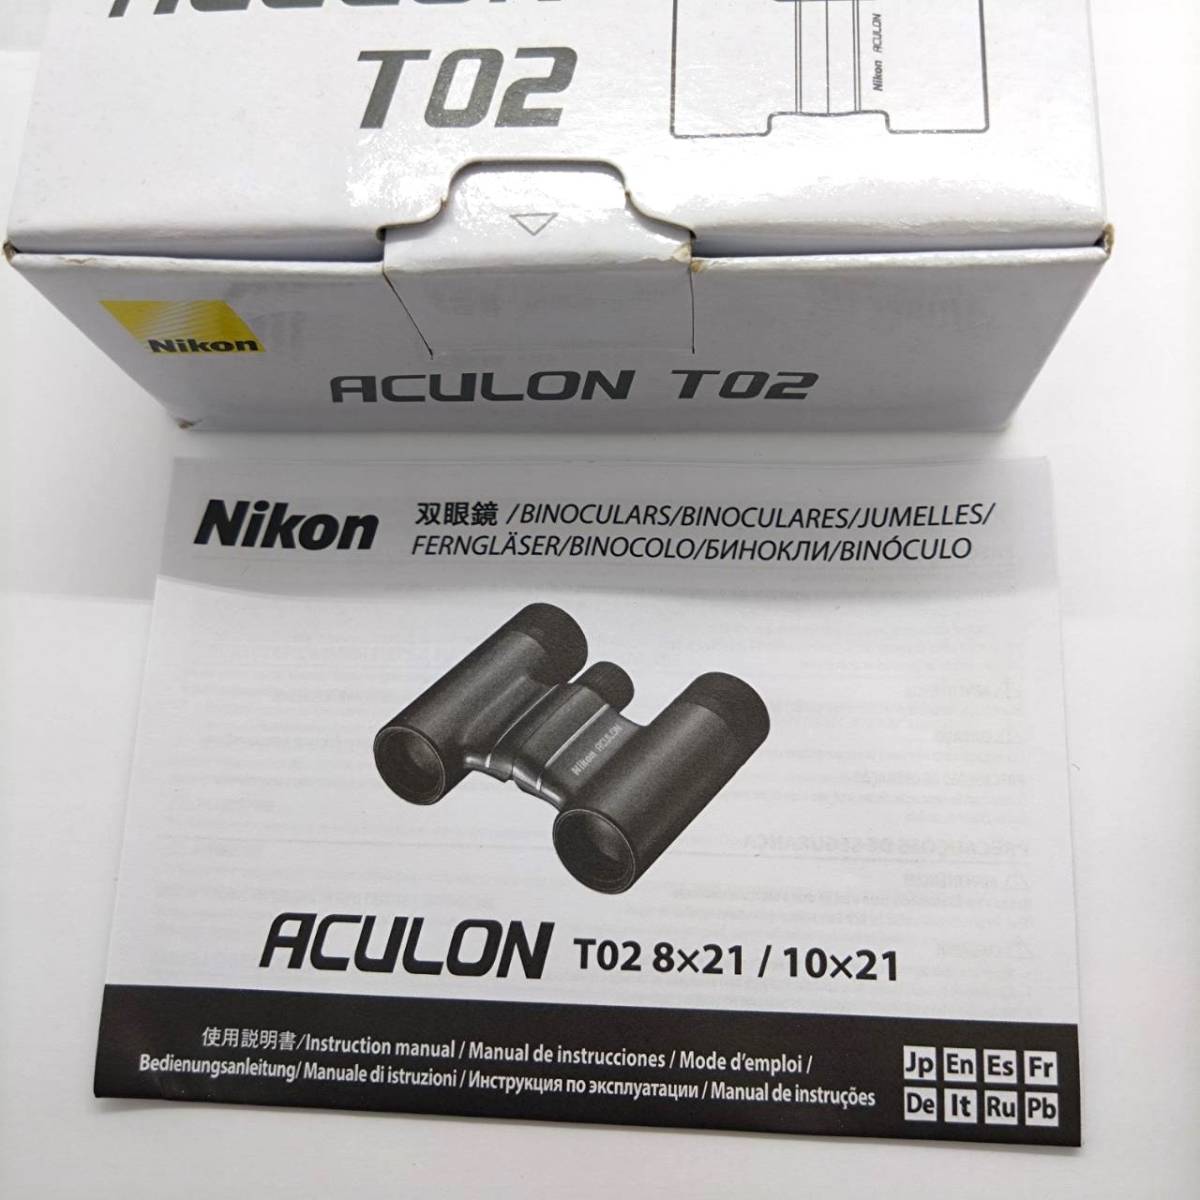  unused Nikon ACULON T02 8x21 6.3° binoculars Nikon akyu long RED outer box instructions soft case strap KA2501